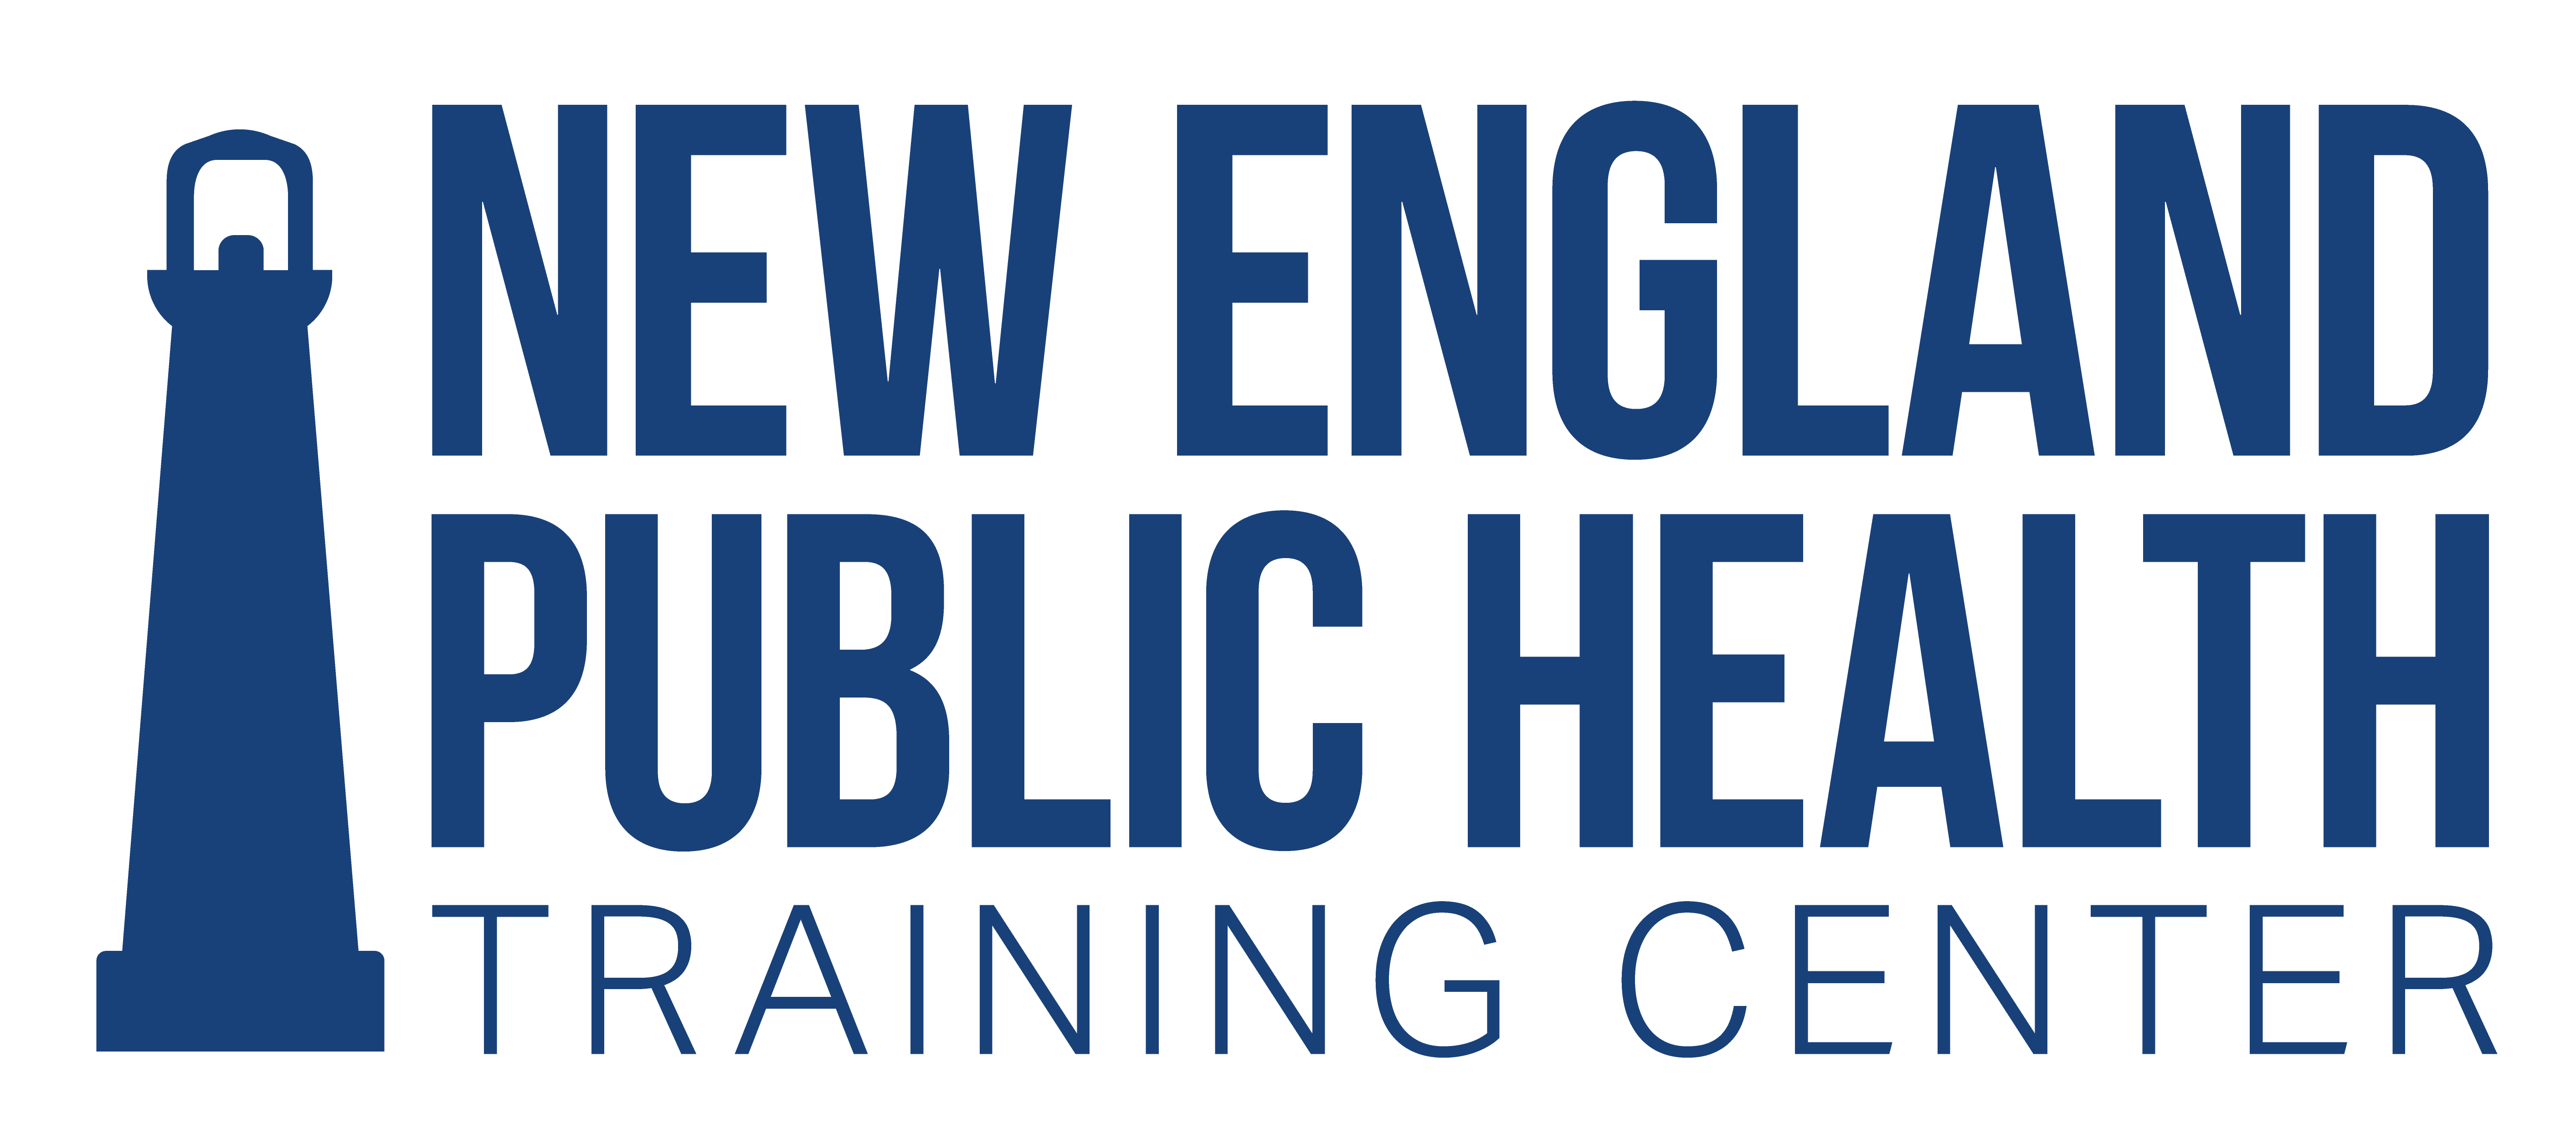 New England Public Health Training Center logo.